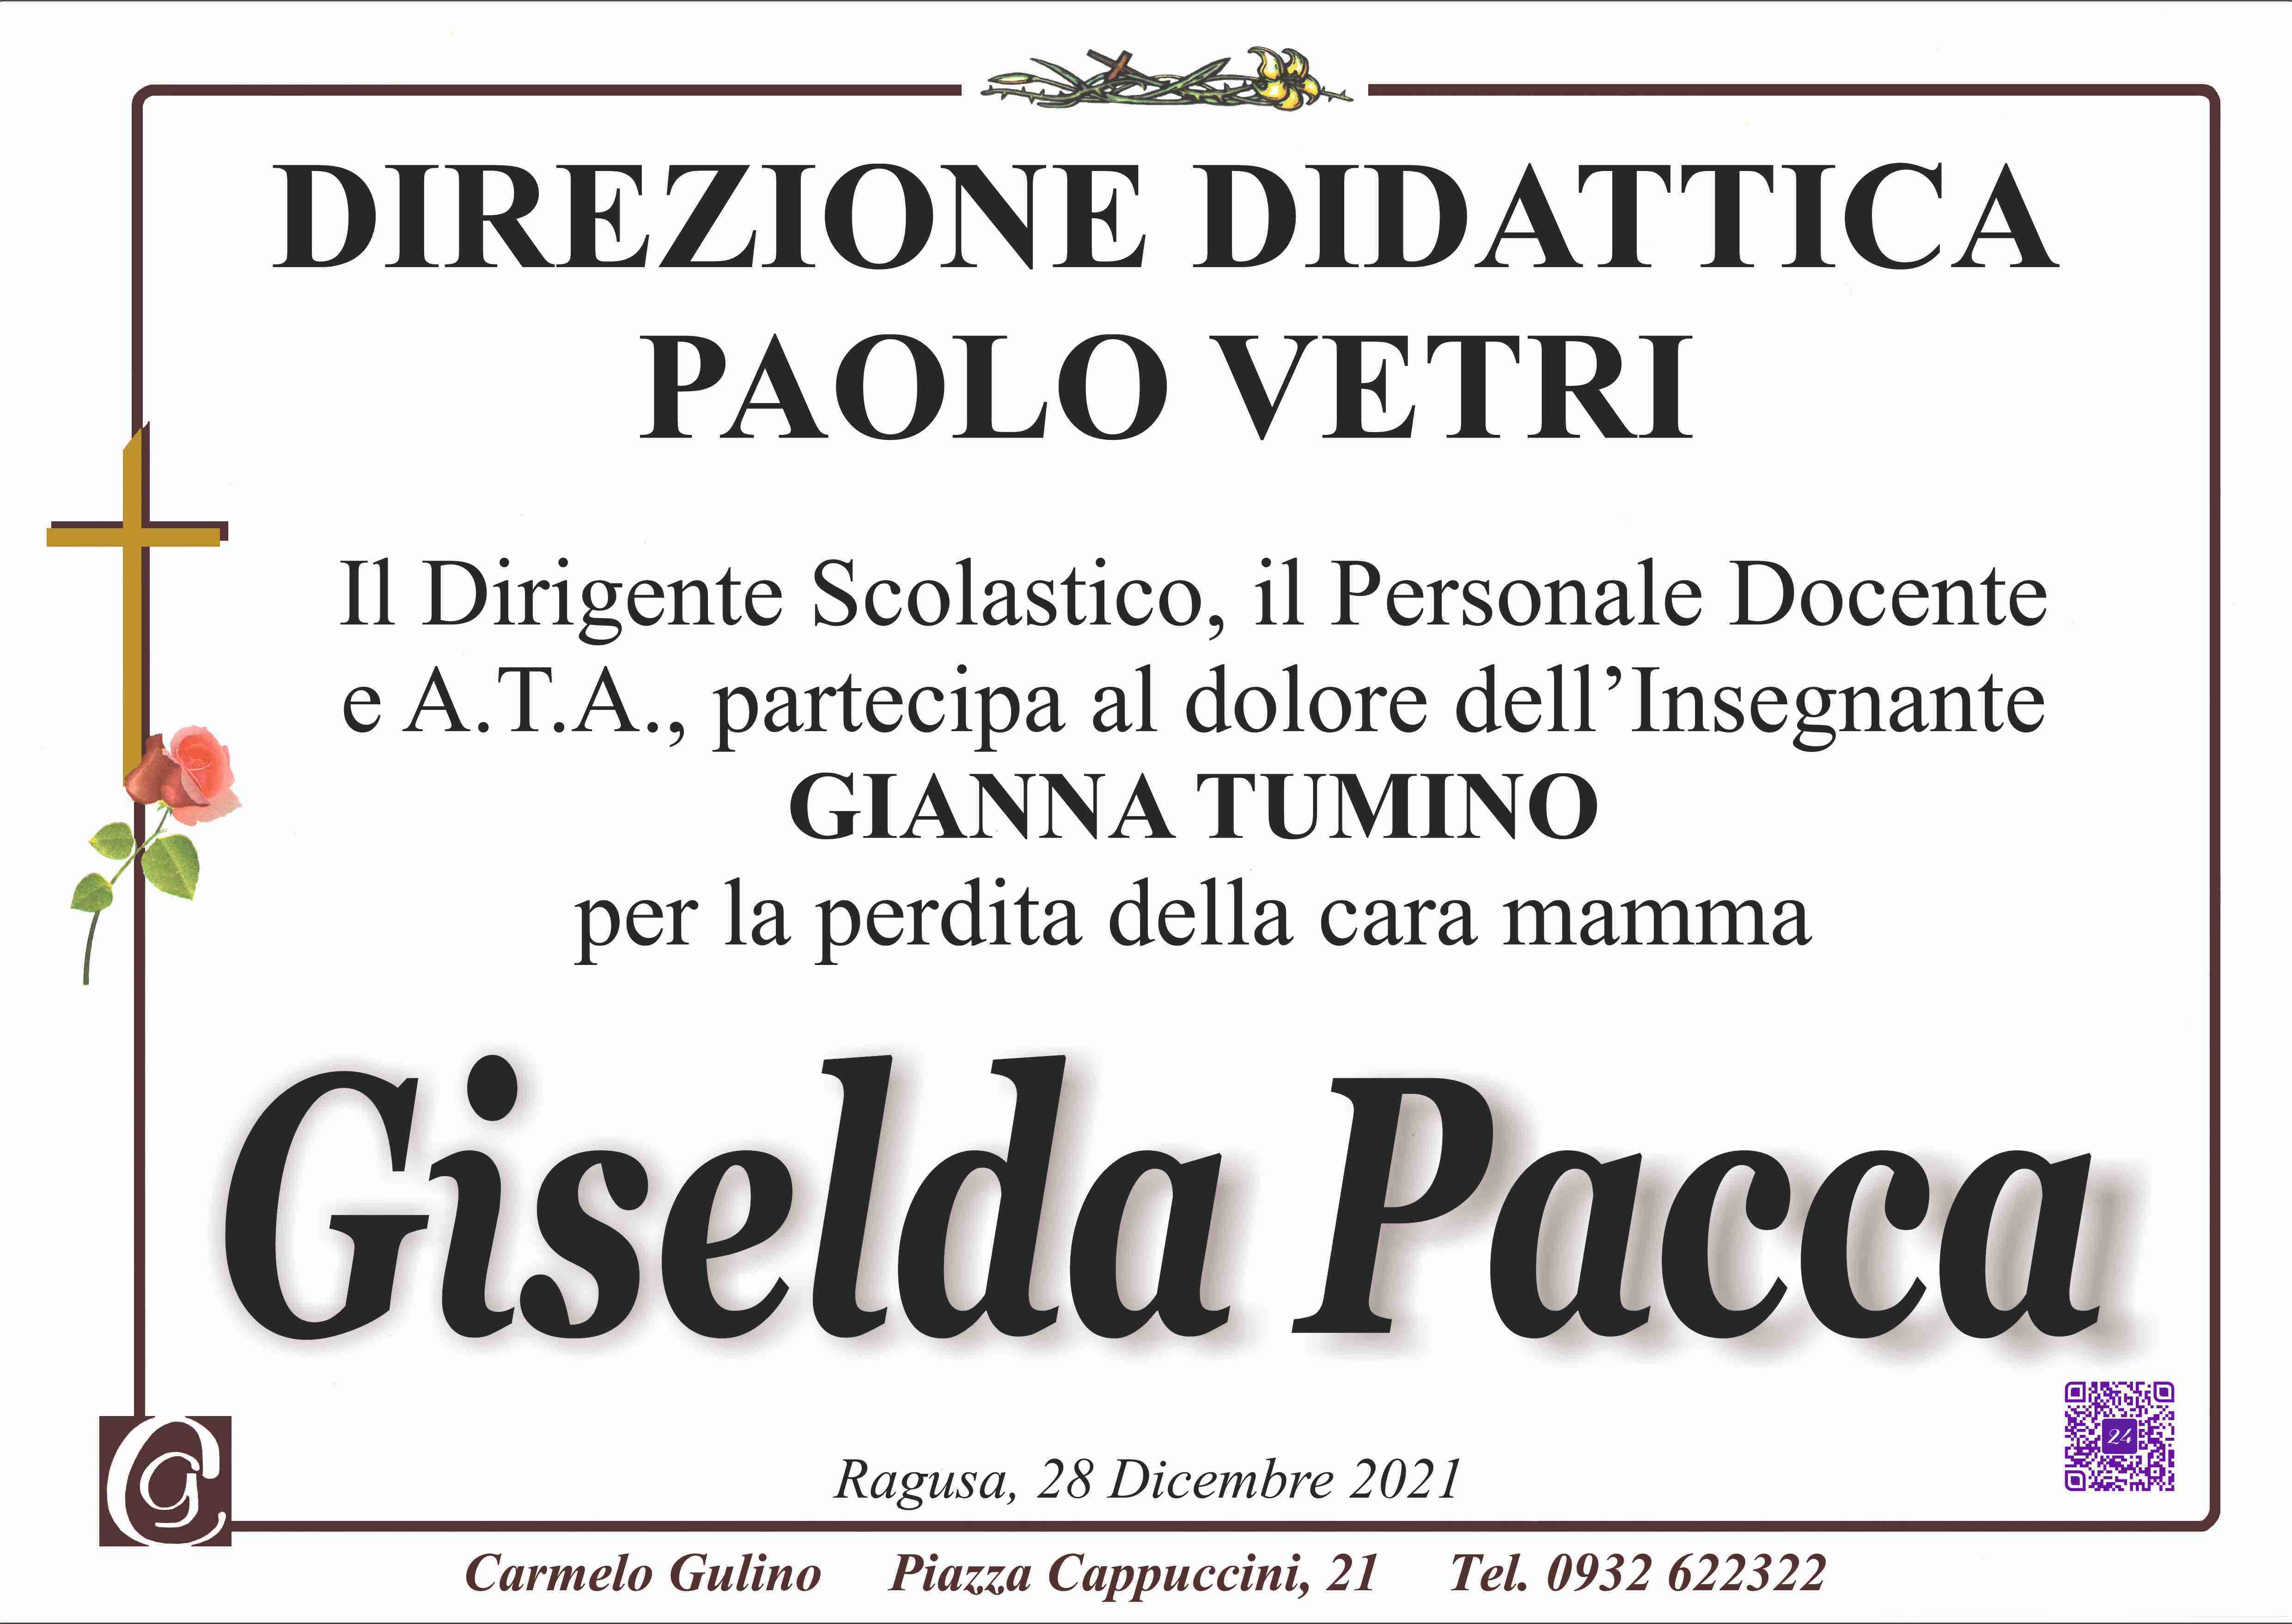 Giselda Pacca